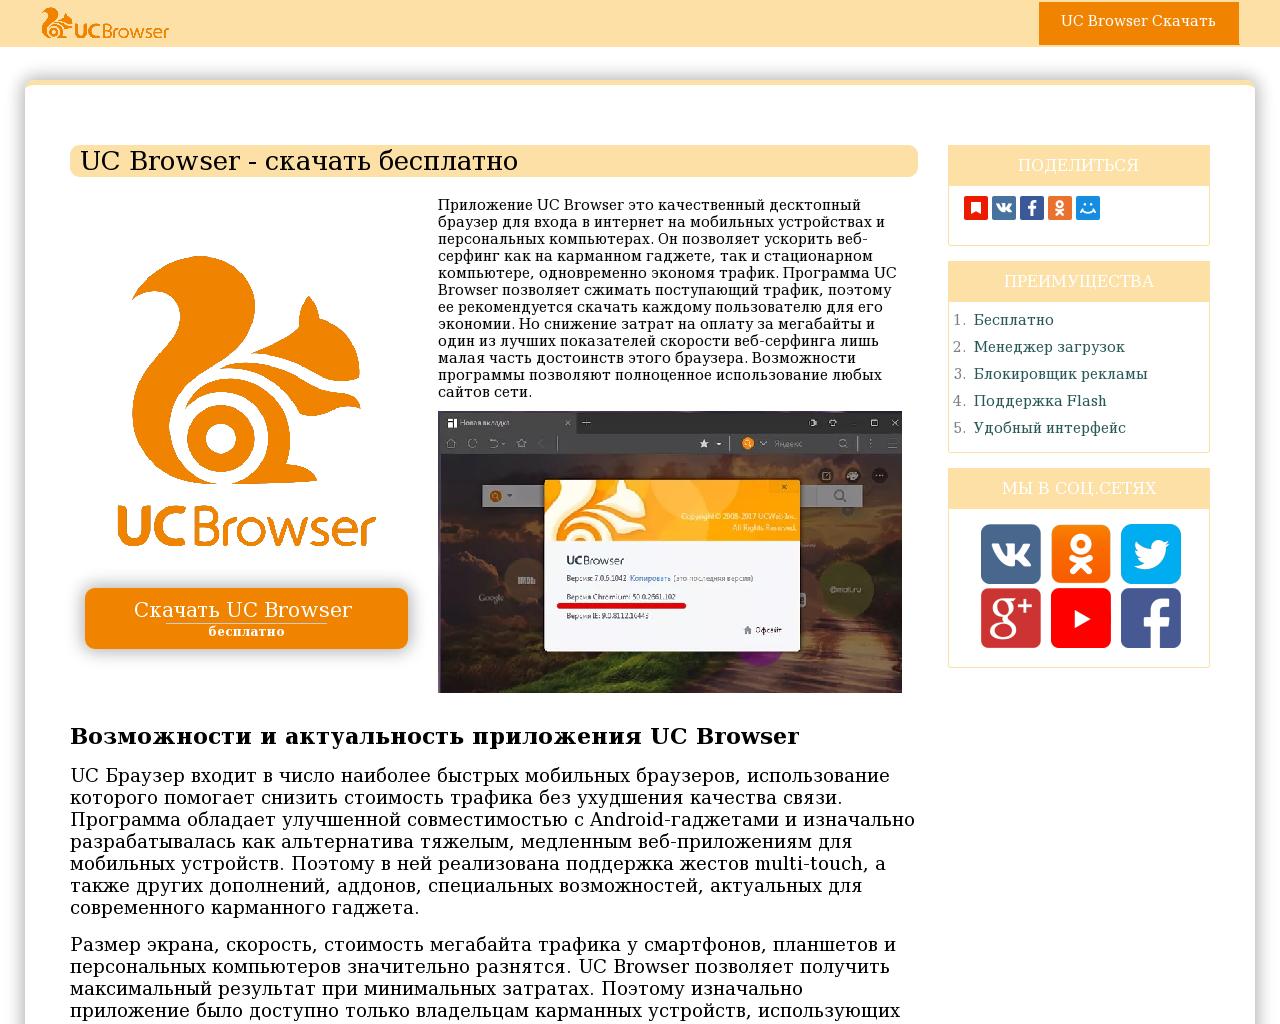 Изображение сайта uc-browser-ru.ru в разрешении 1280x1024